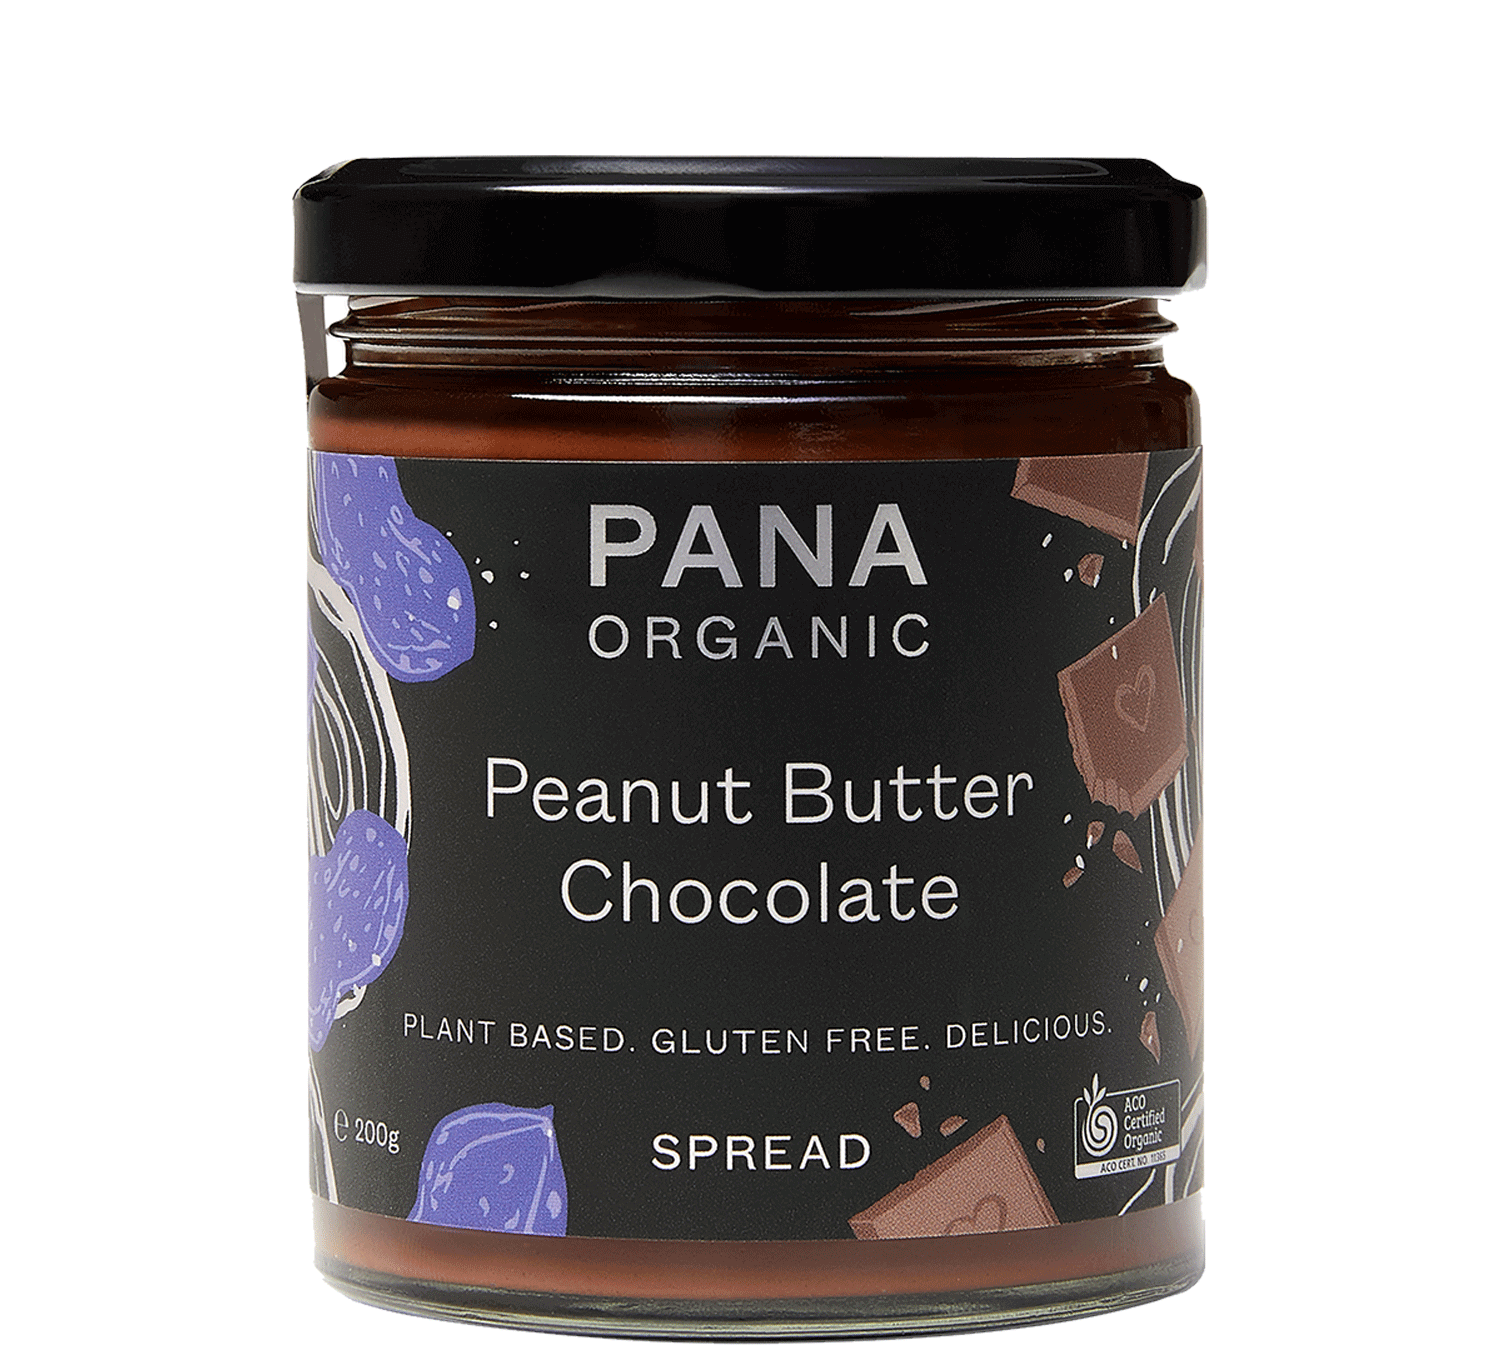 A jar of Pana Organic brand Peanut Butter Chocolate spread (200g)